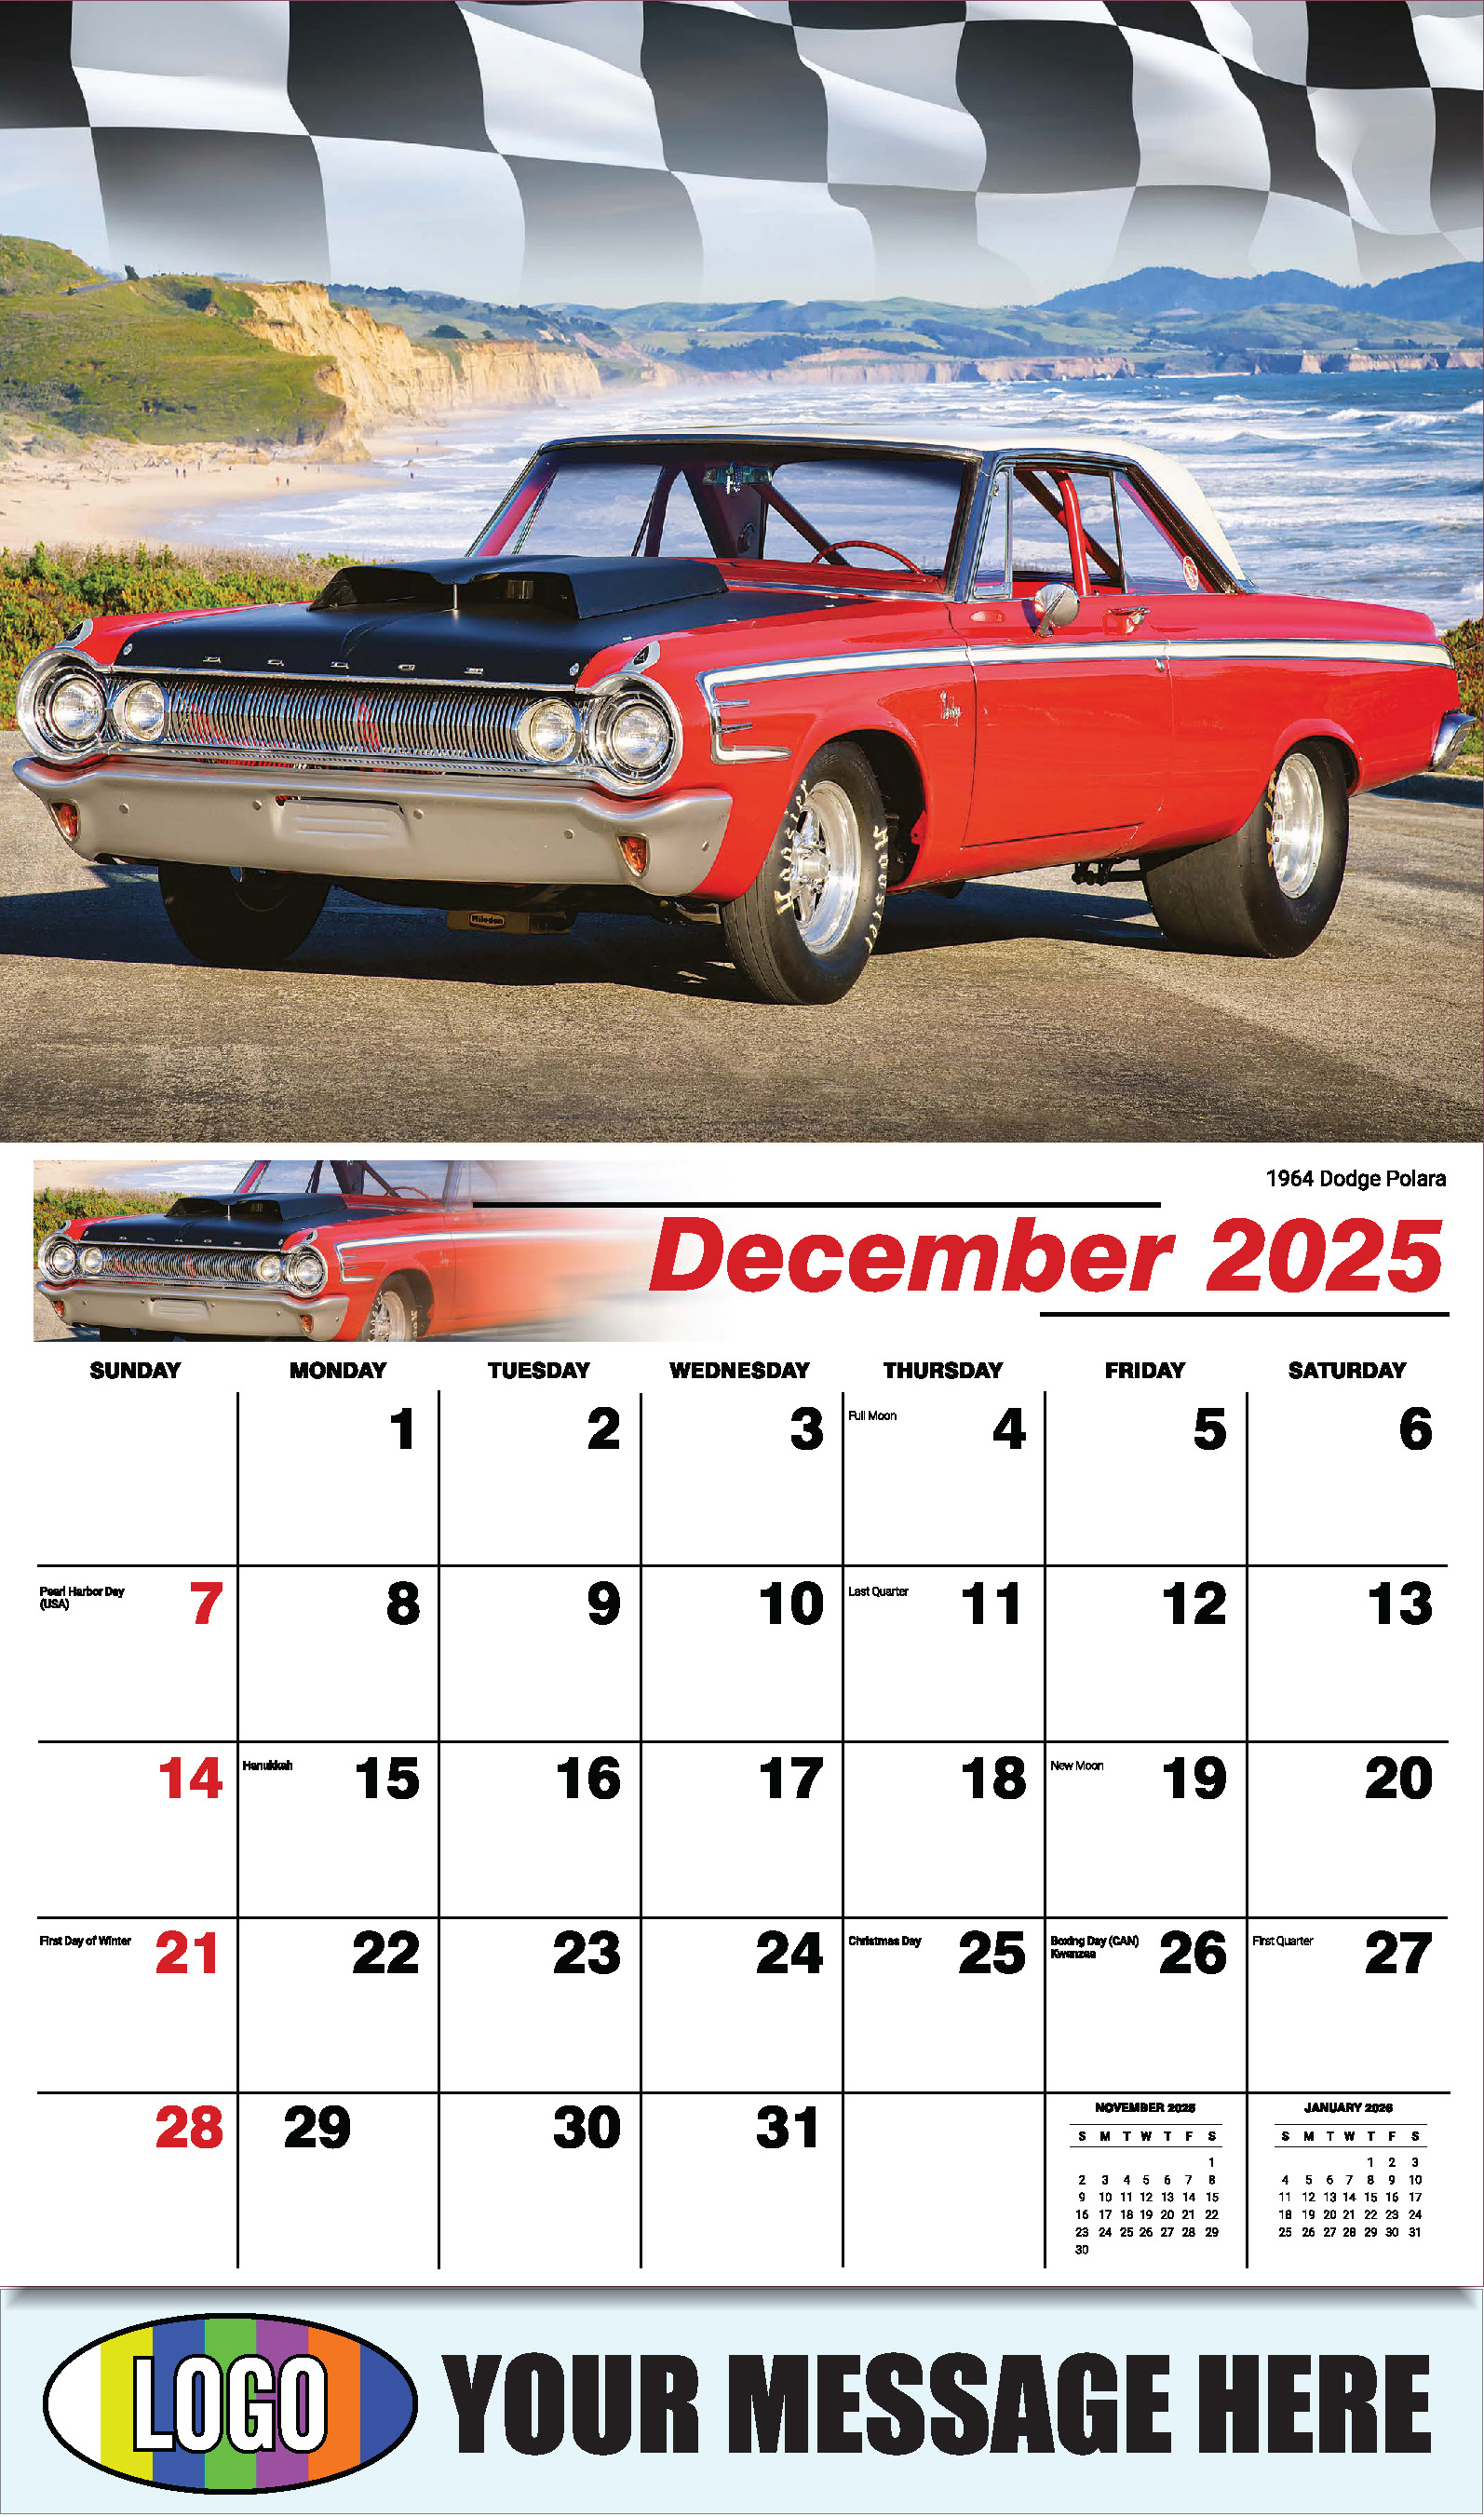 Road Warriors 2025 Automotive Business Promo Wall Calendar - December